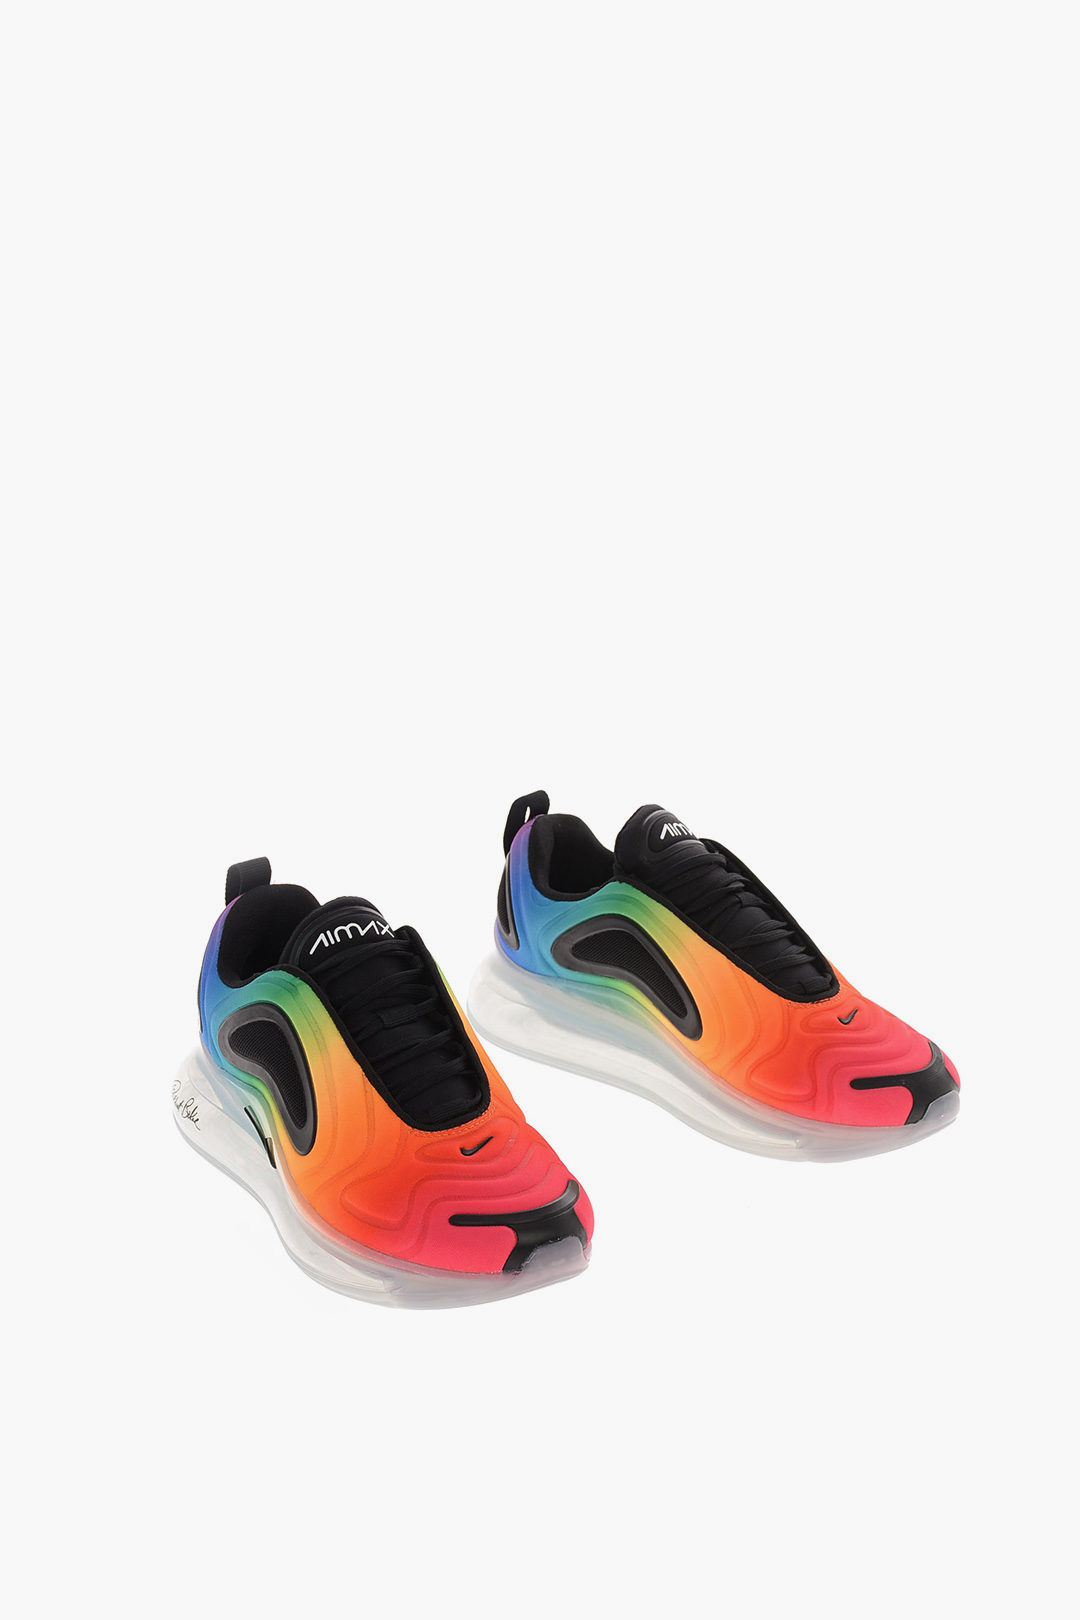 Nike Air Max 720 Be True Shoes